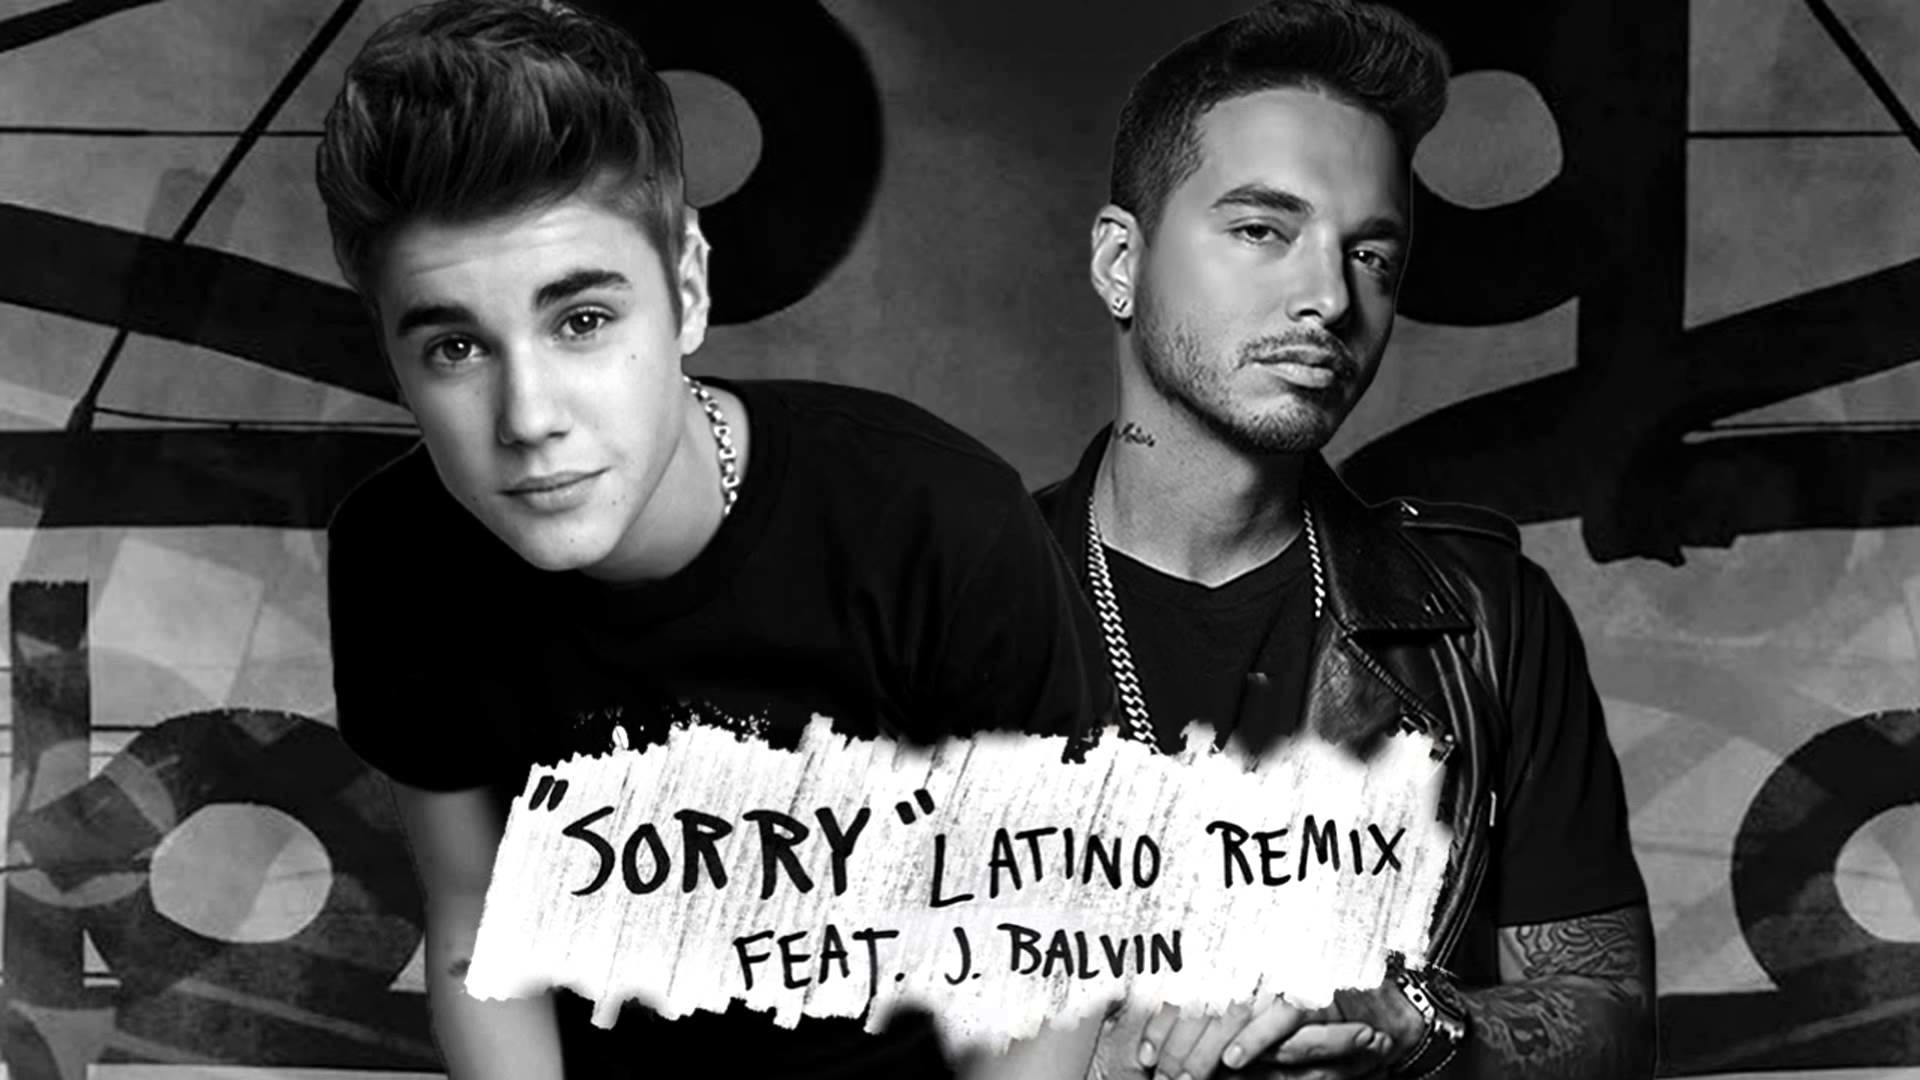 1920x1080 Sorry Latino Remix - Justin Bieber ft J Balvin HD (1080p)